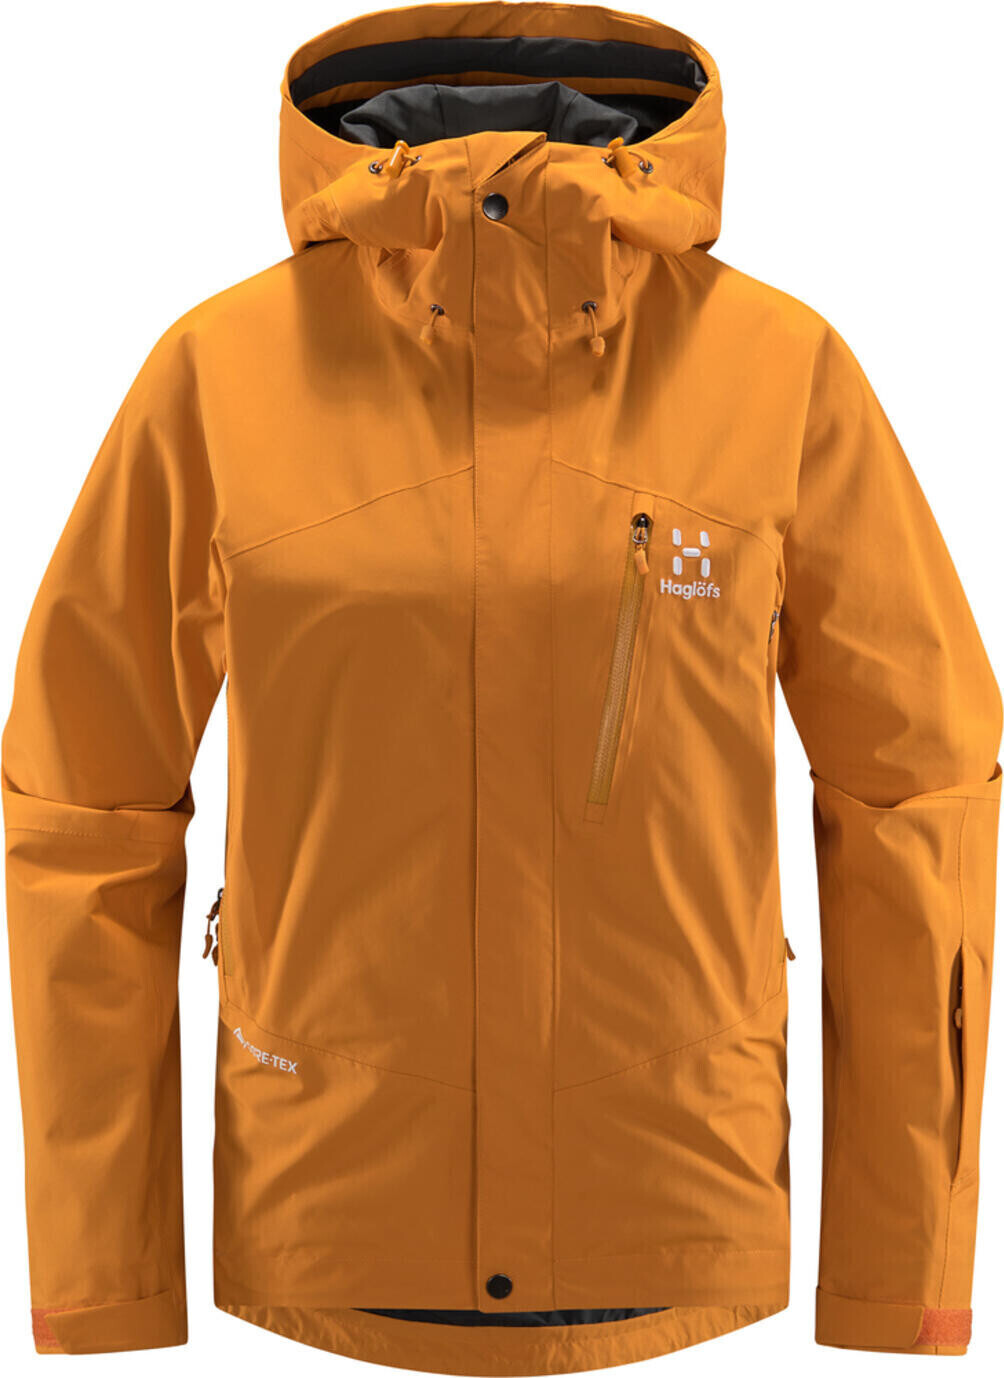 Buy Haglöfs Astral Gtx Jacket Women (604669) desert yellow from